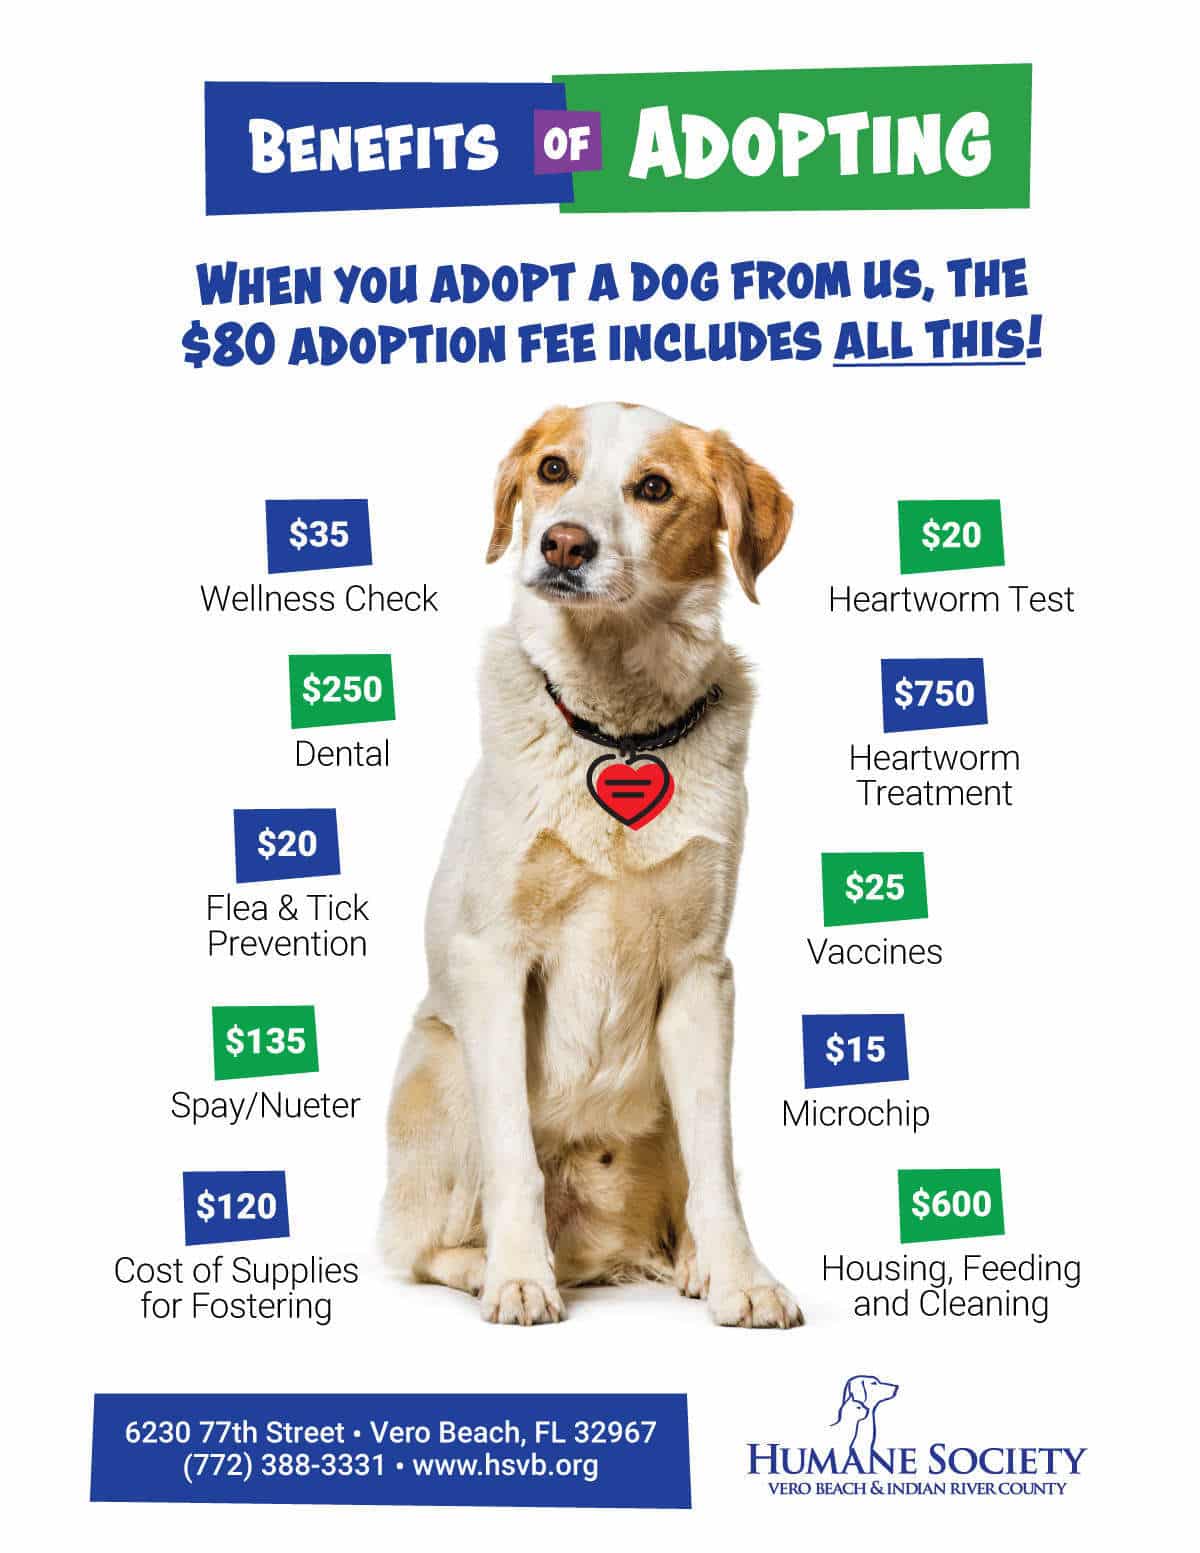 Pet sites for adoption